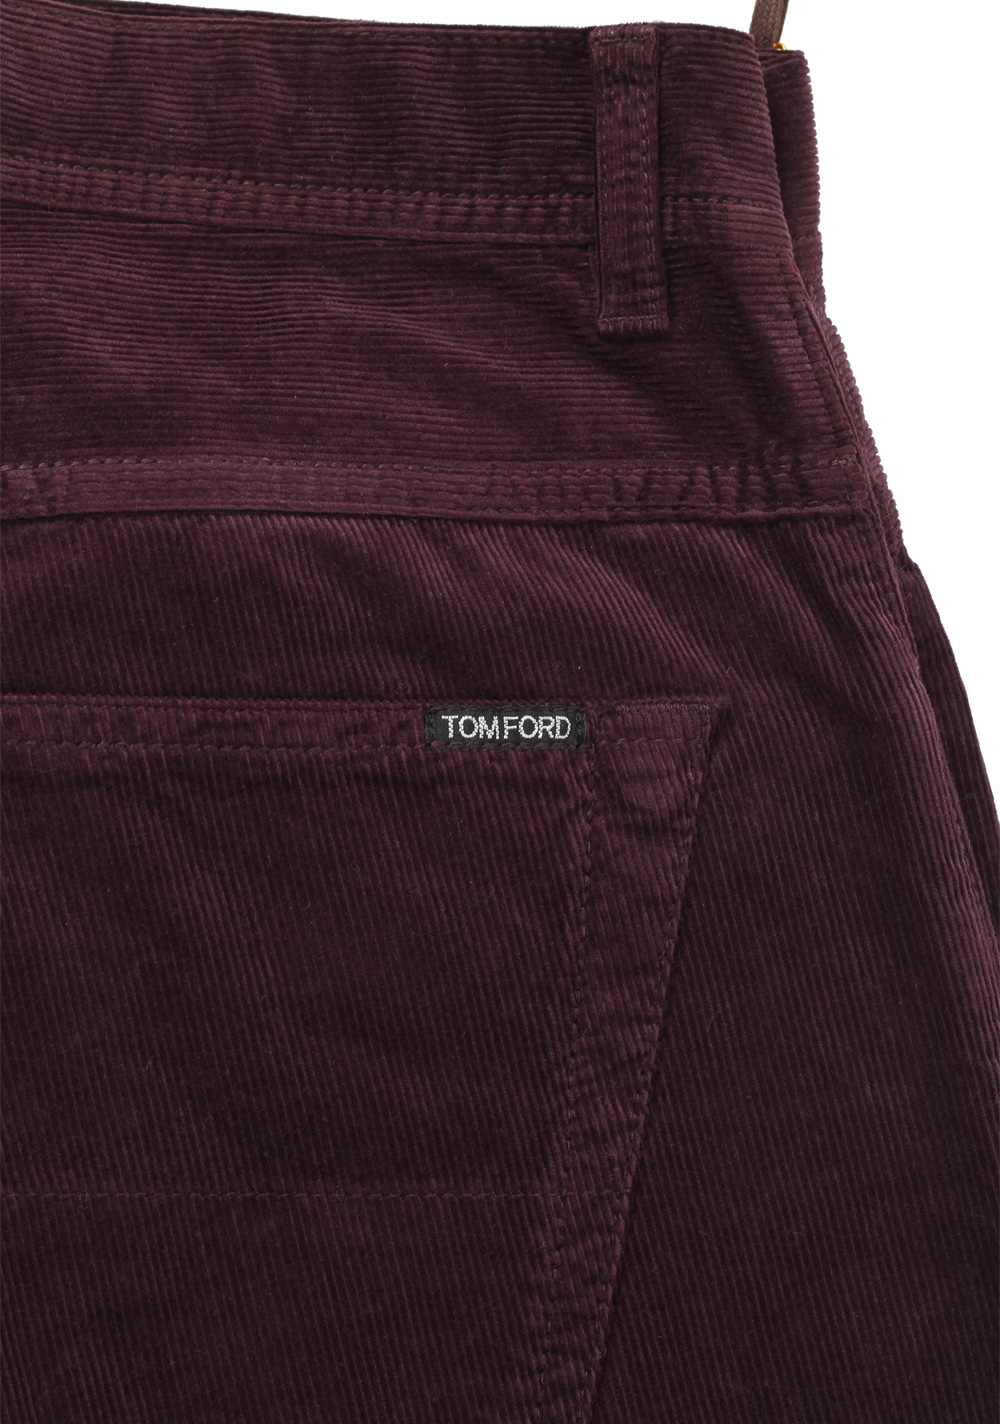 TOM FORD Aubergine Jeans TFD003 Size 54 / 38 U.S. | Costume Limité